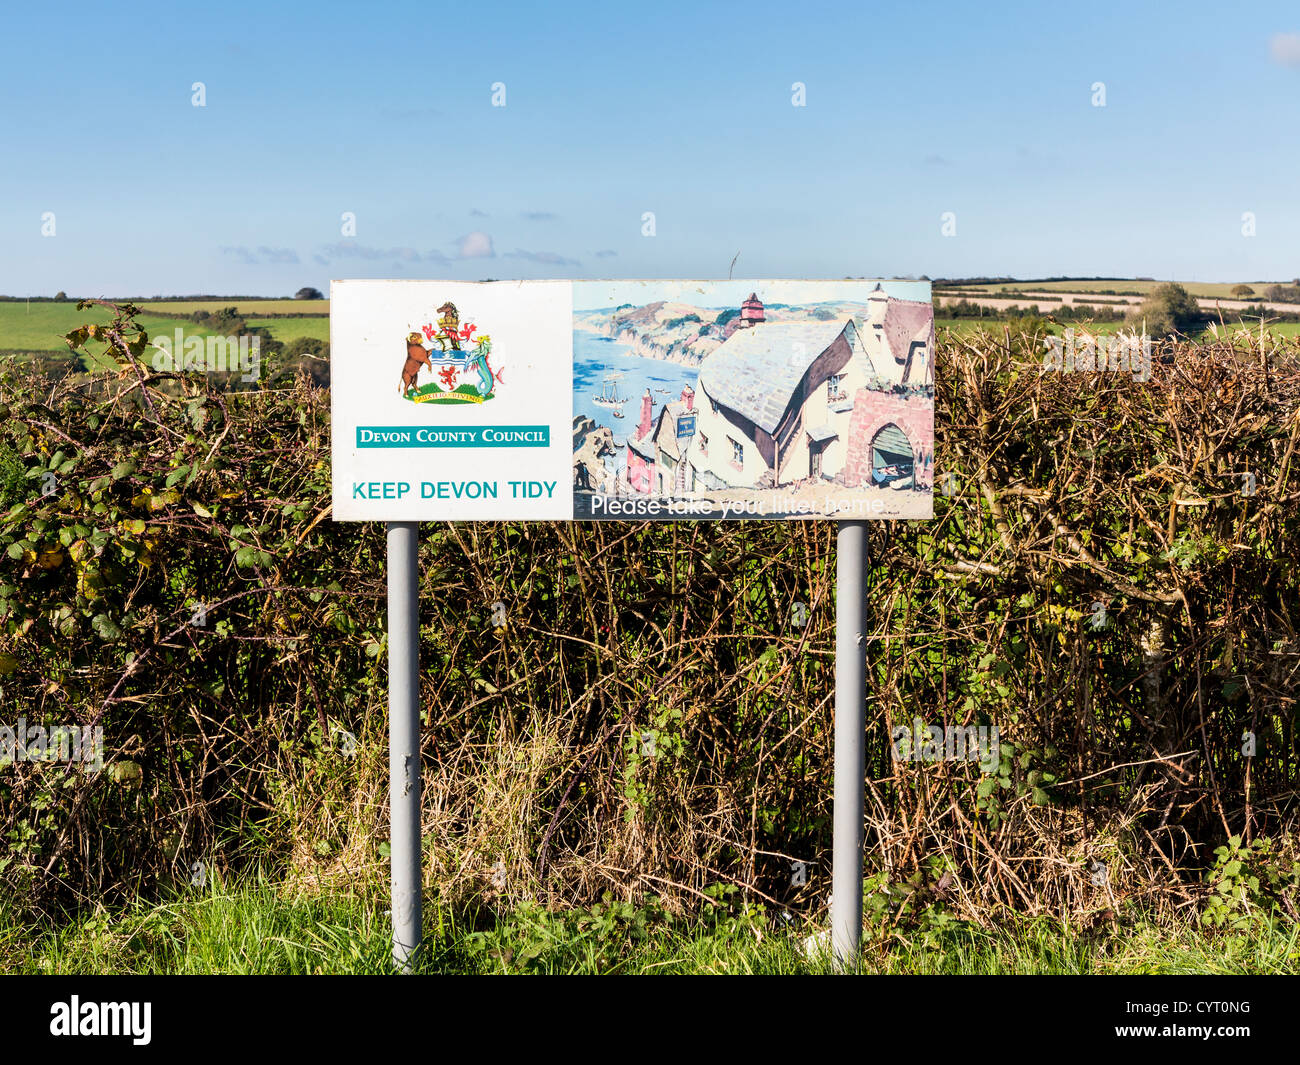 Keep Devon Tidy sign in rural North Devon setting, England Stock Photo